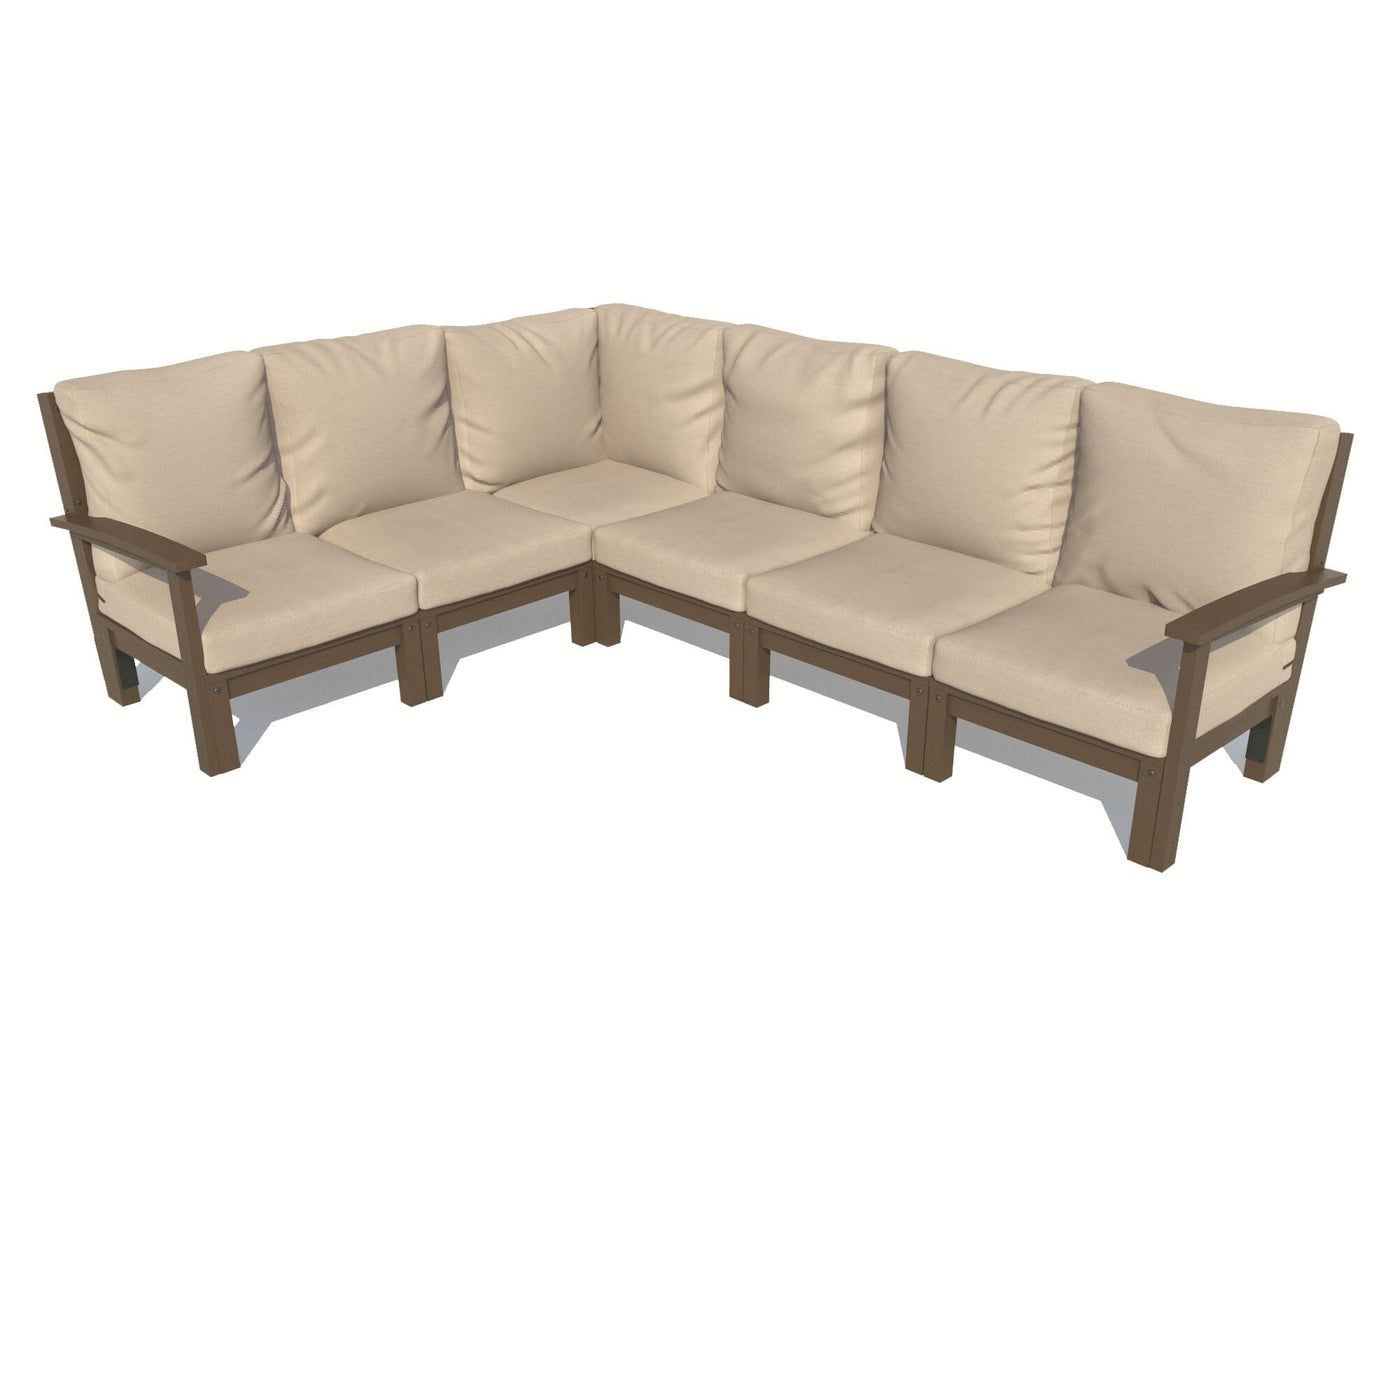 Bespoke Deep Seating: 6 Piece Sectional Sofa Set Deep Seating Highwood USA Driftwood Weathered Acorn 